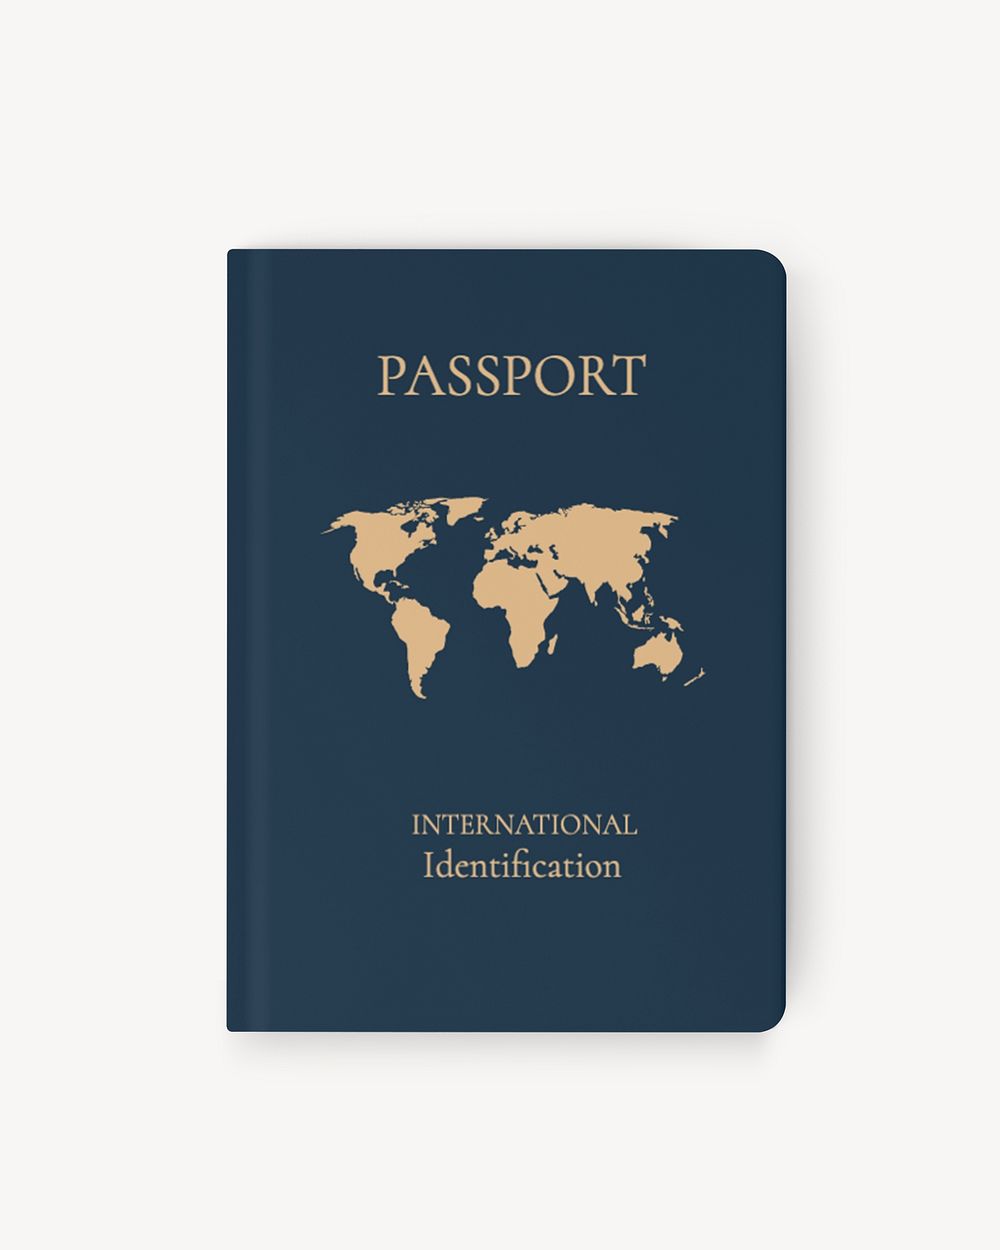 Passport cover mockup psd